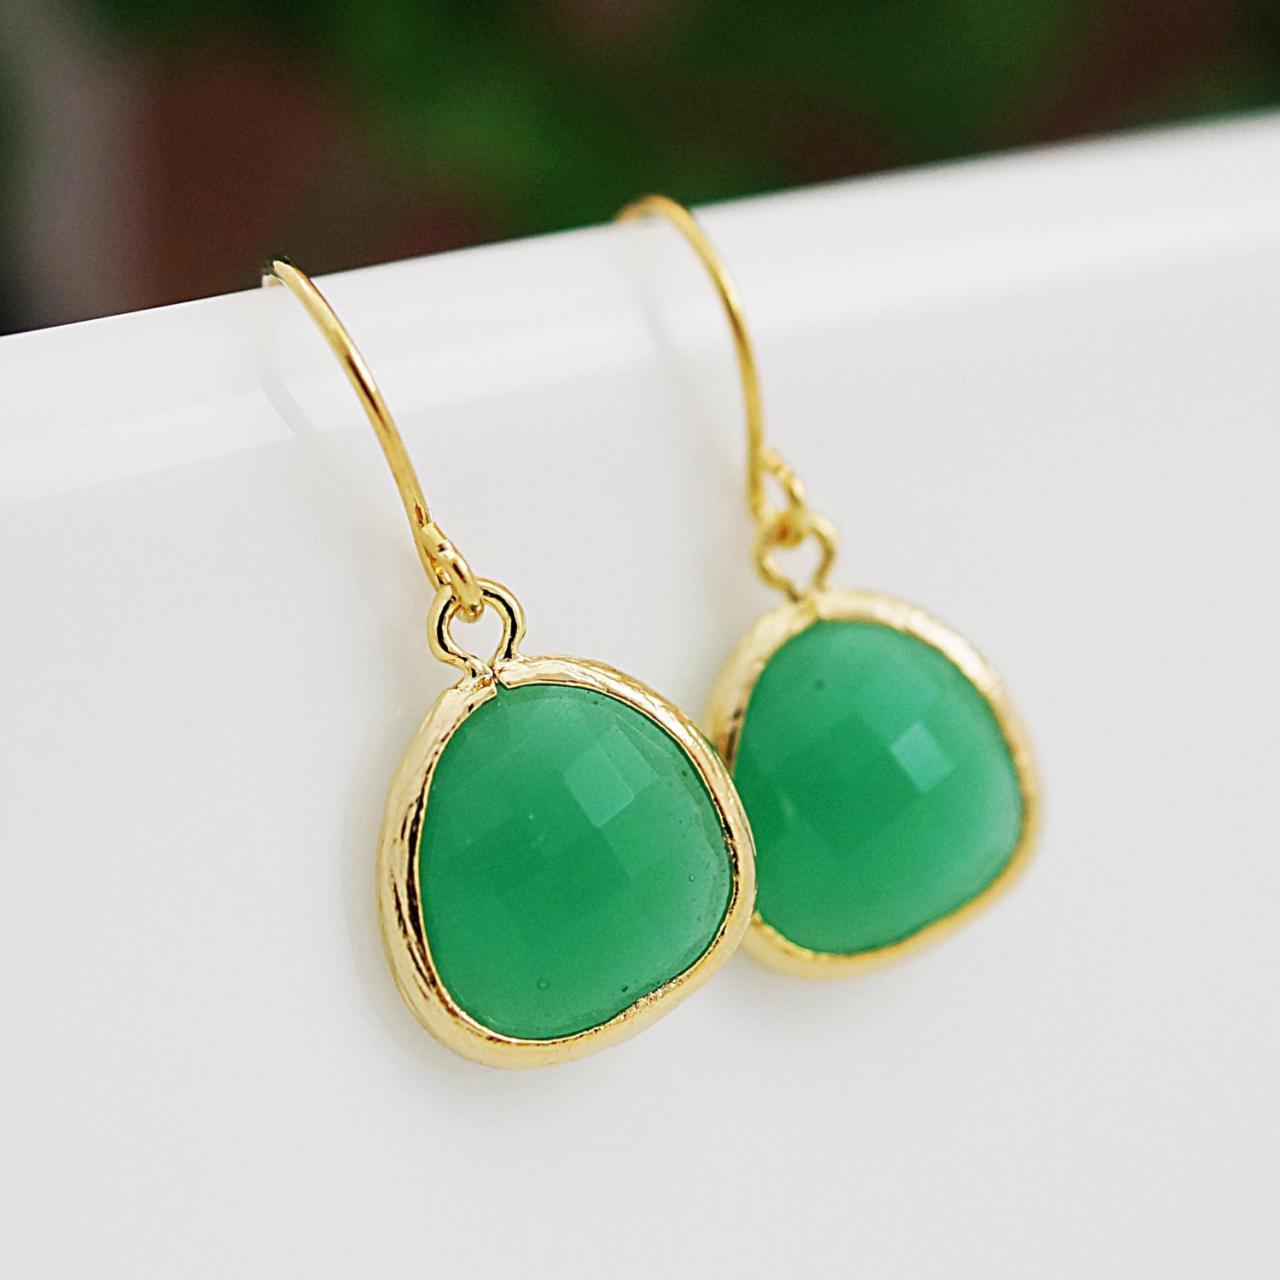 Palace Green Opal Glass Drop Dangle Earrings - Bridesmaid Gift, Bridesmaid Earrings, Bridesmaid Jewelry, Wedding, Christmas Gift For Her